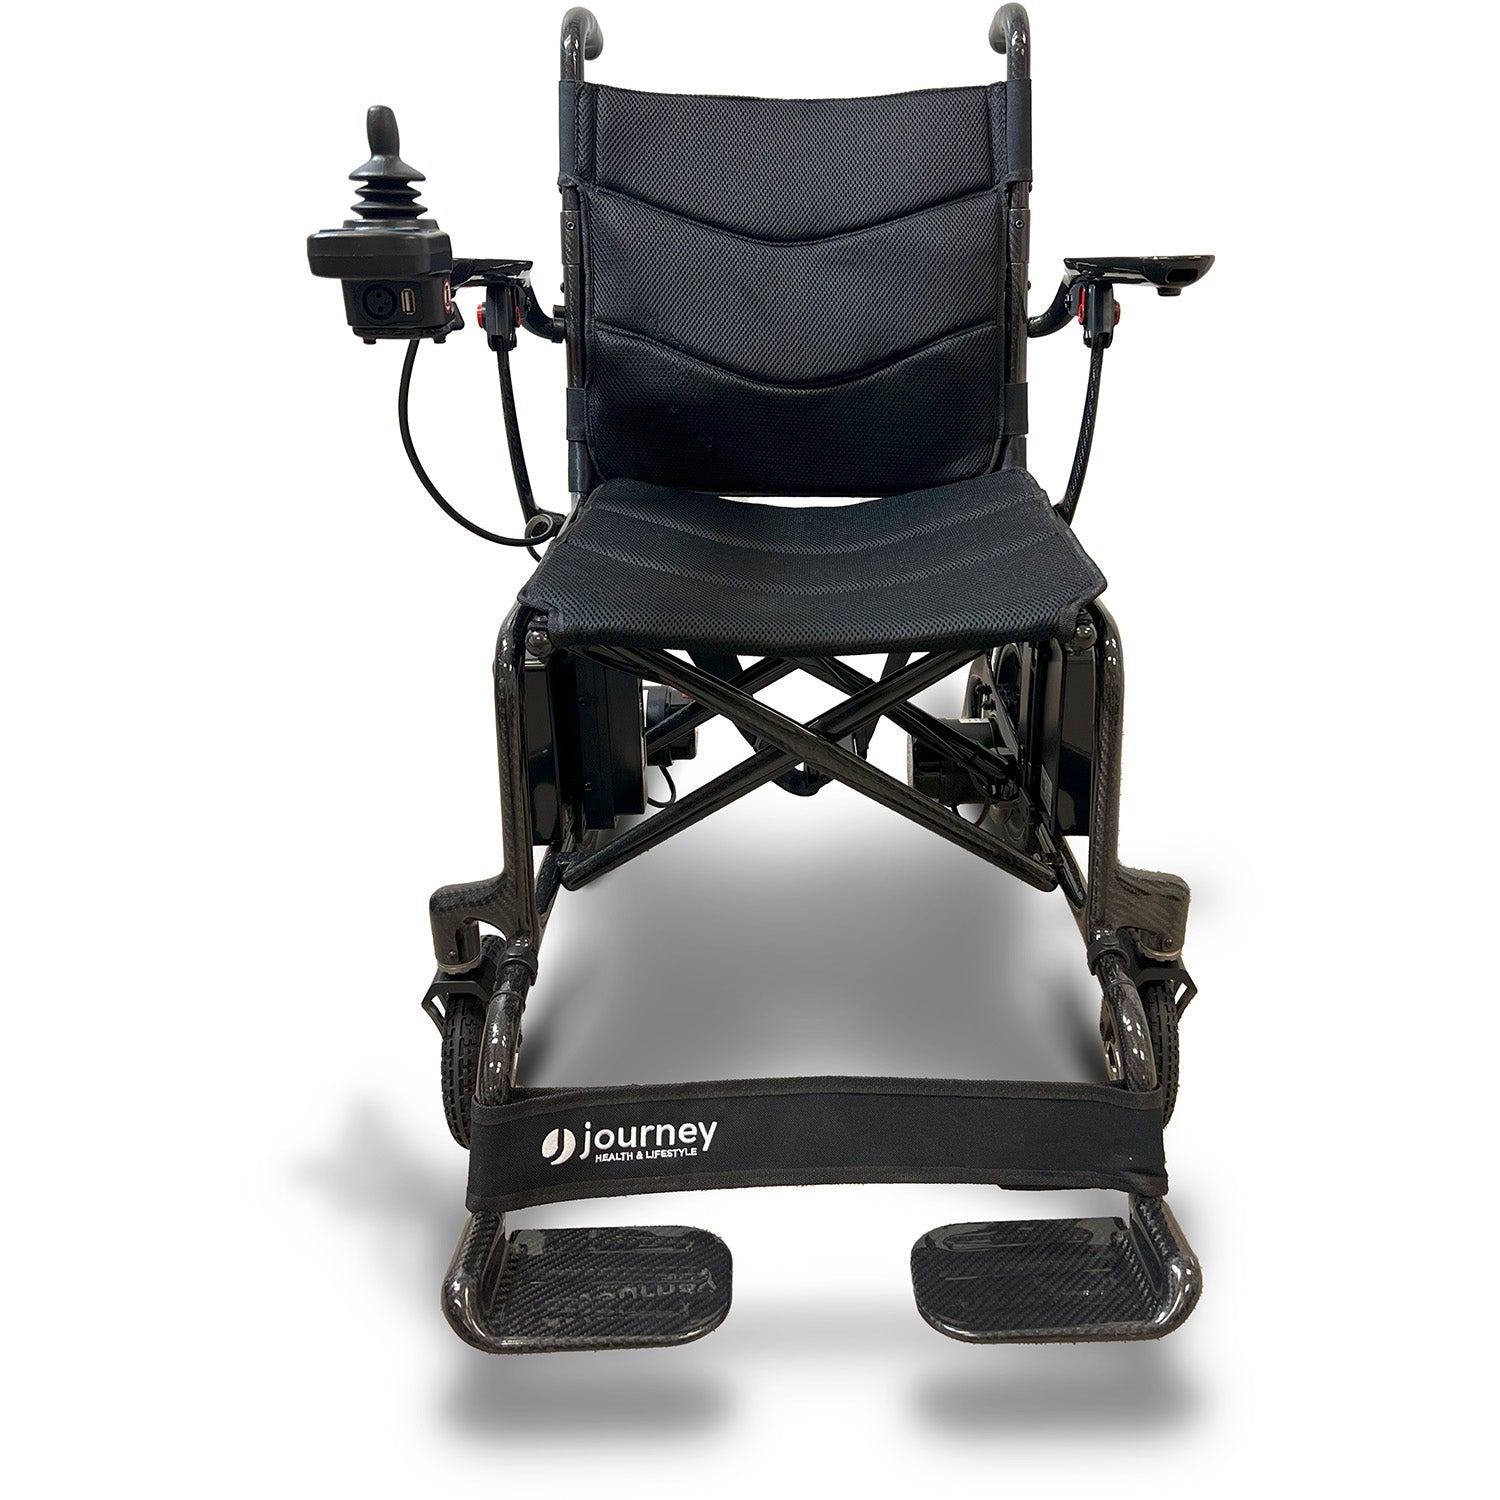 Journey - Carbon Fiber Folding Power Chair